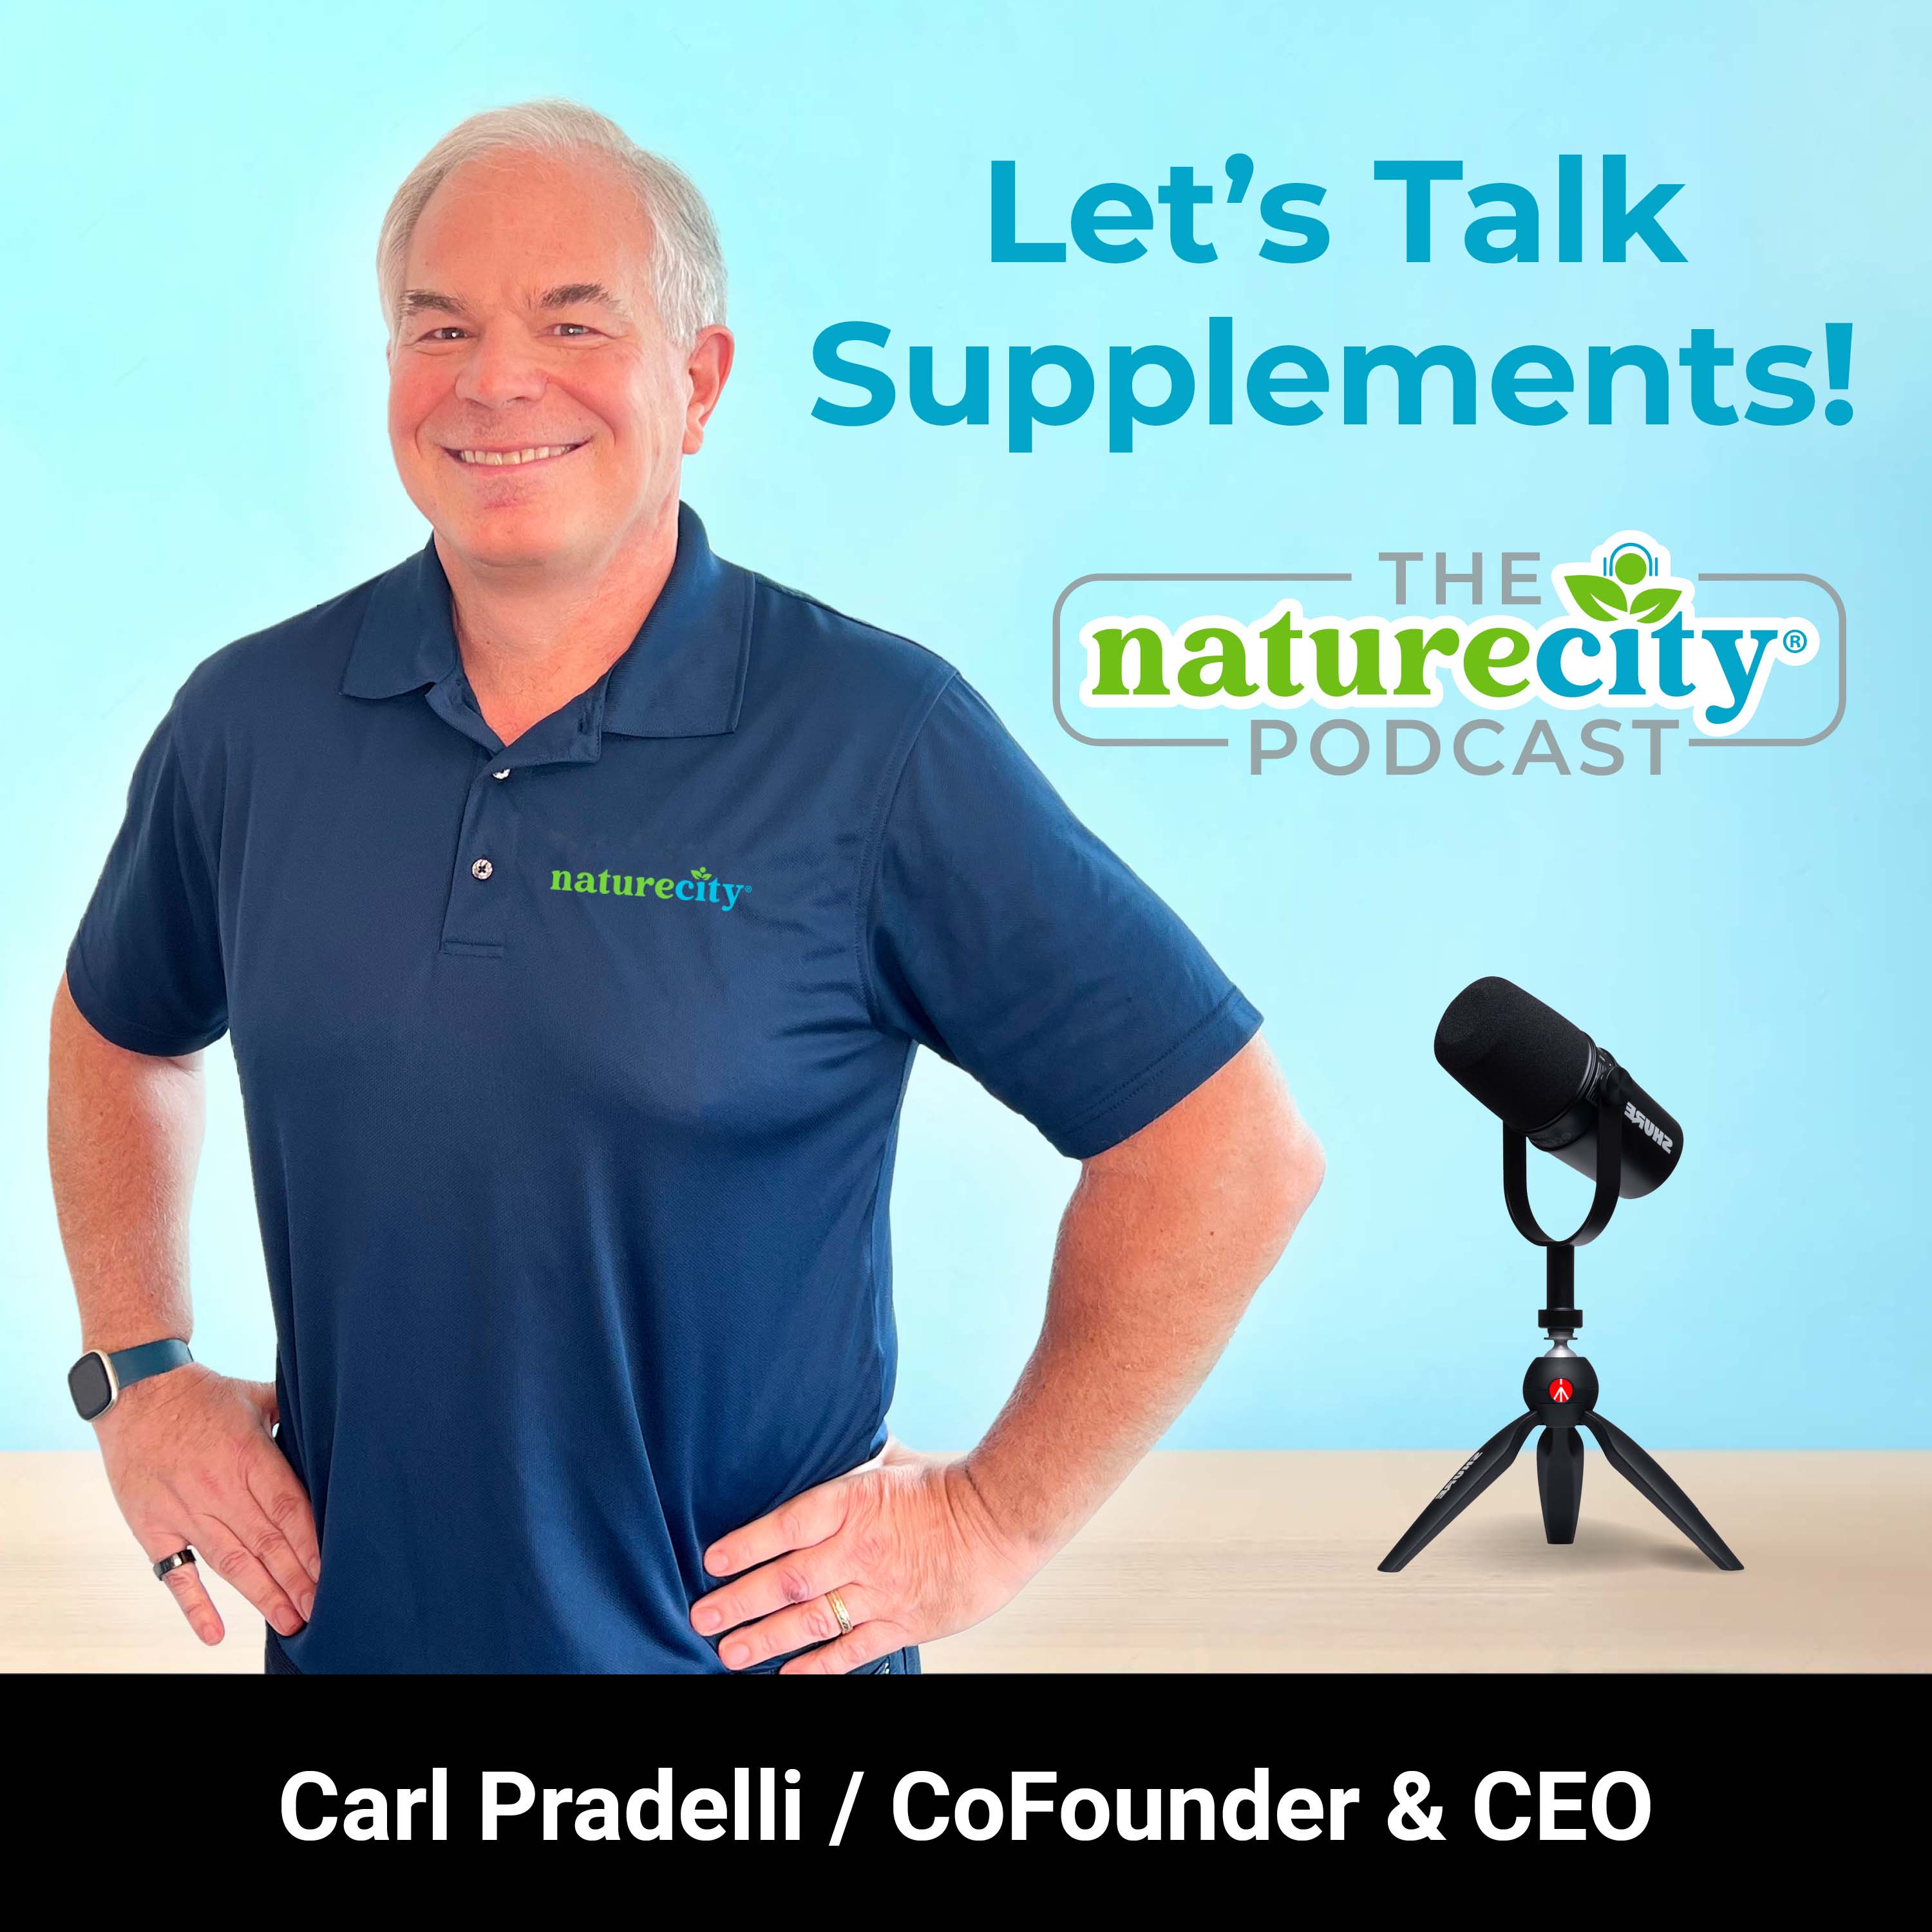 The NatureCity Podcast